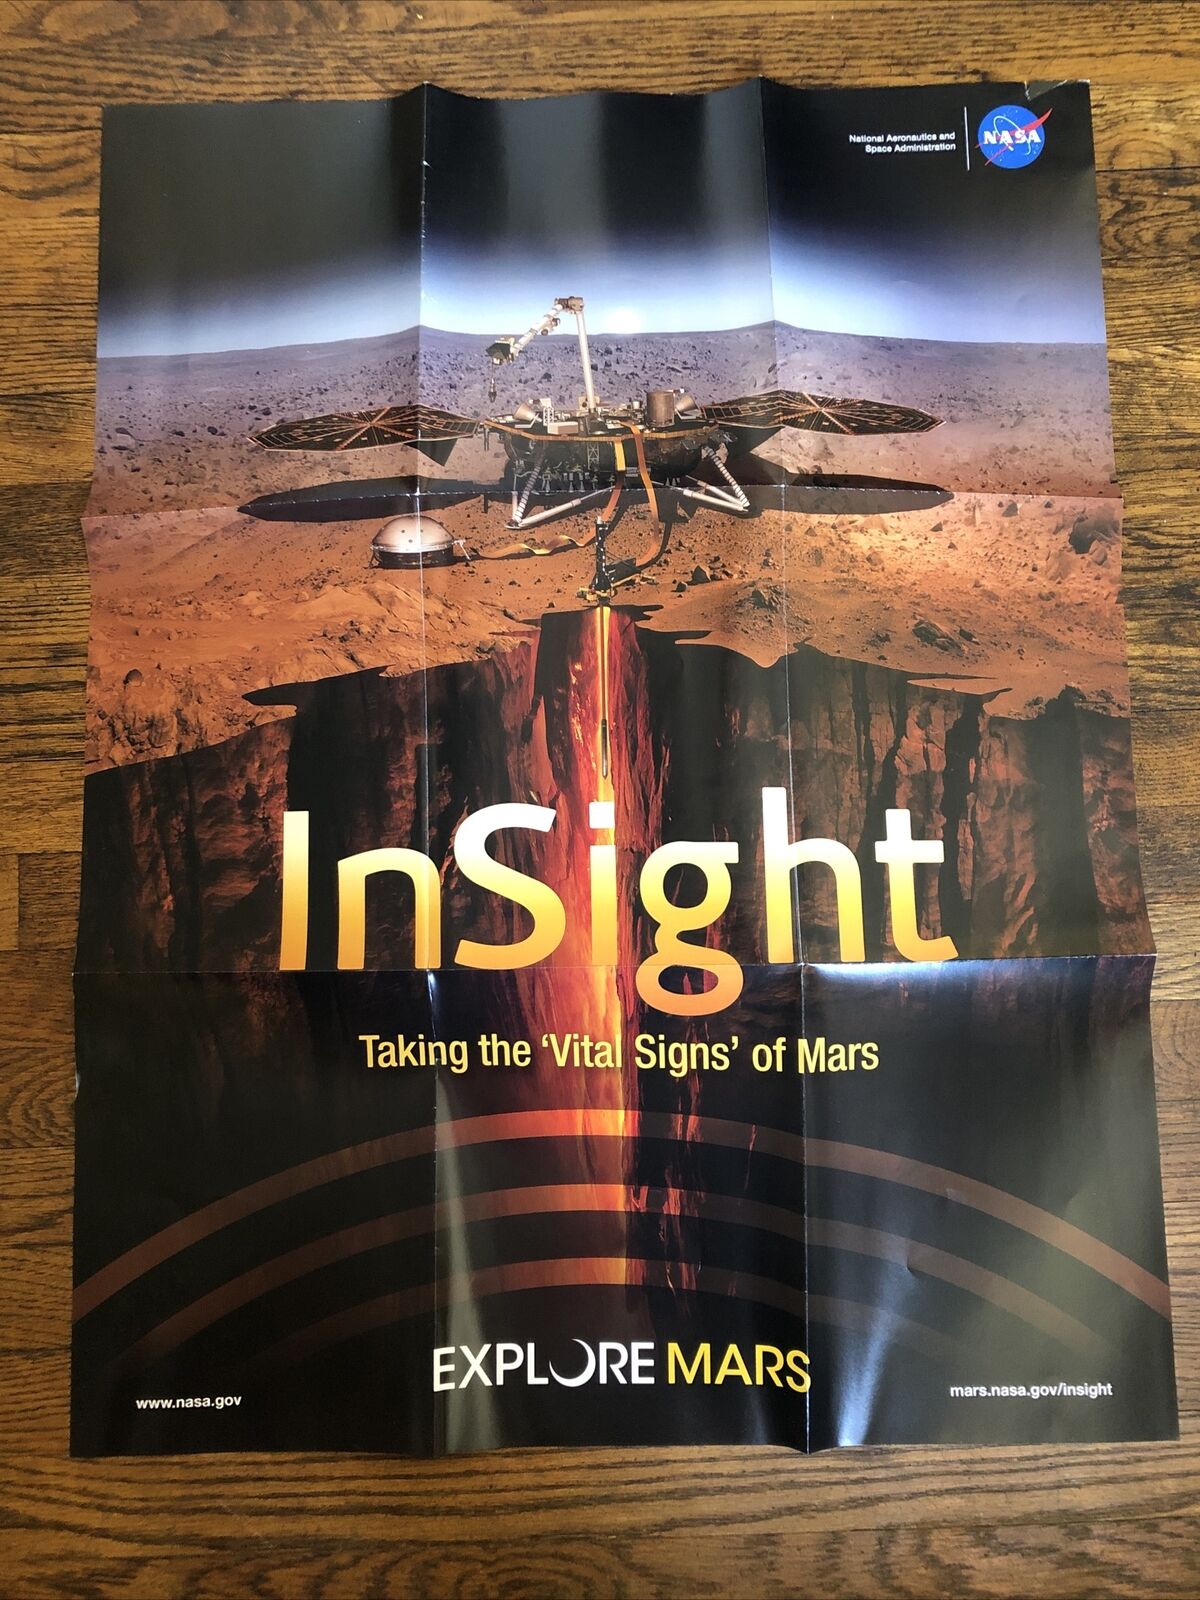 NASA - Explore Mars Poster - Insight - SPACE Exporation 25 x 33